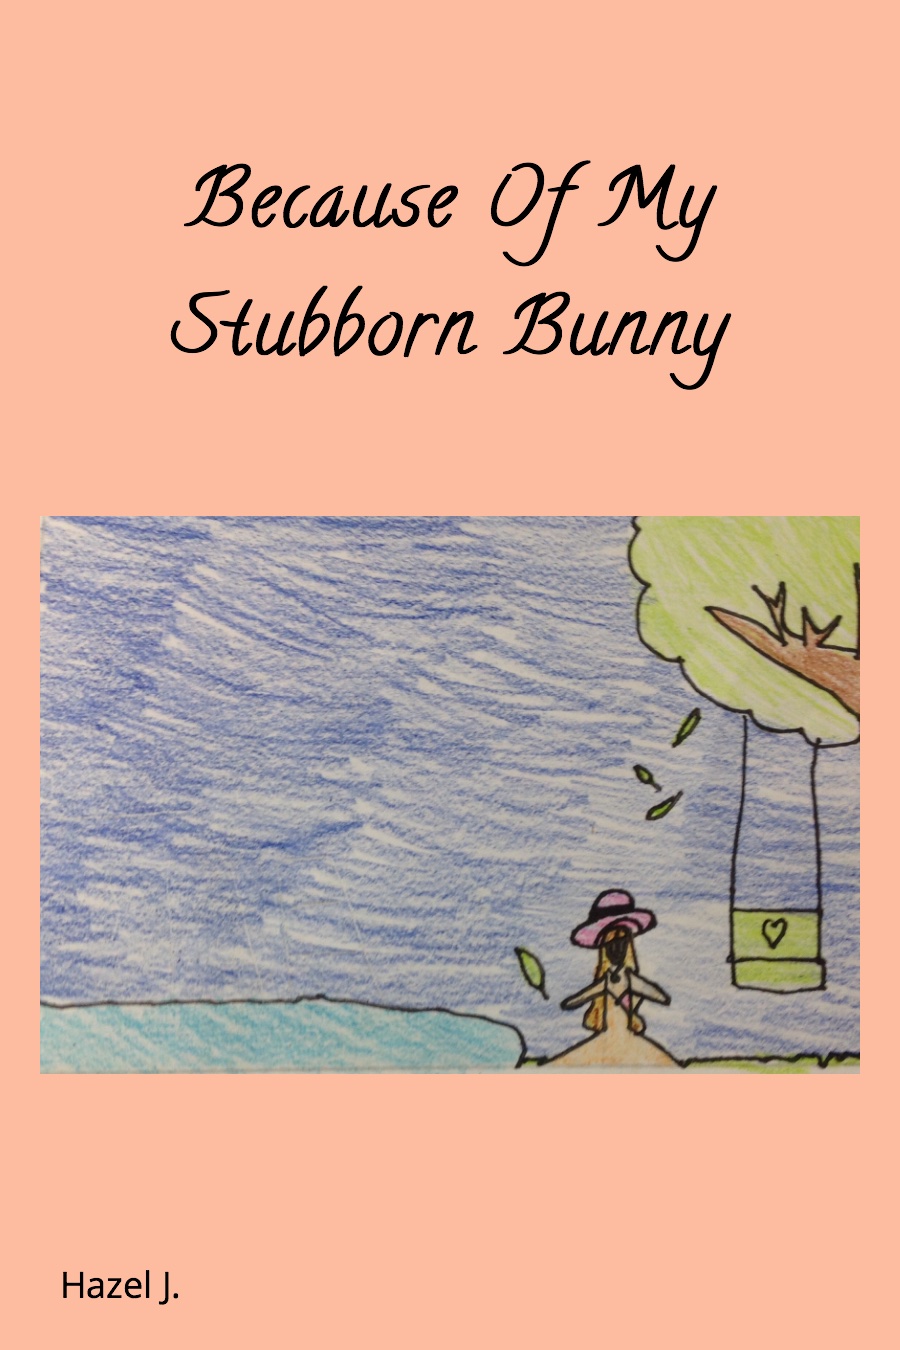 Because Of My Stubborn Bunny by Hazel J